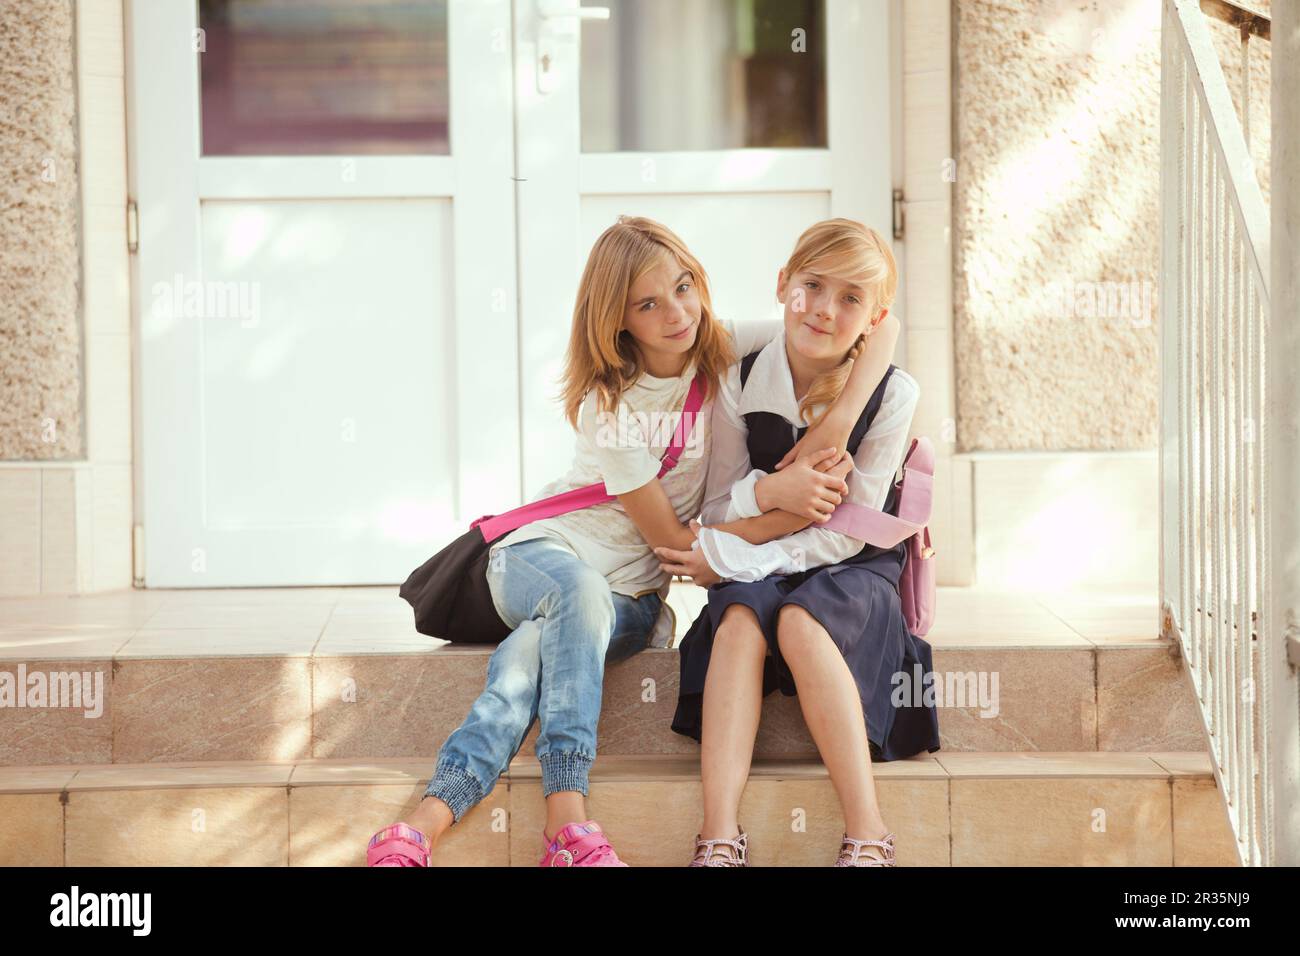 Two schoolgirls outdoors Stock Photo